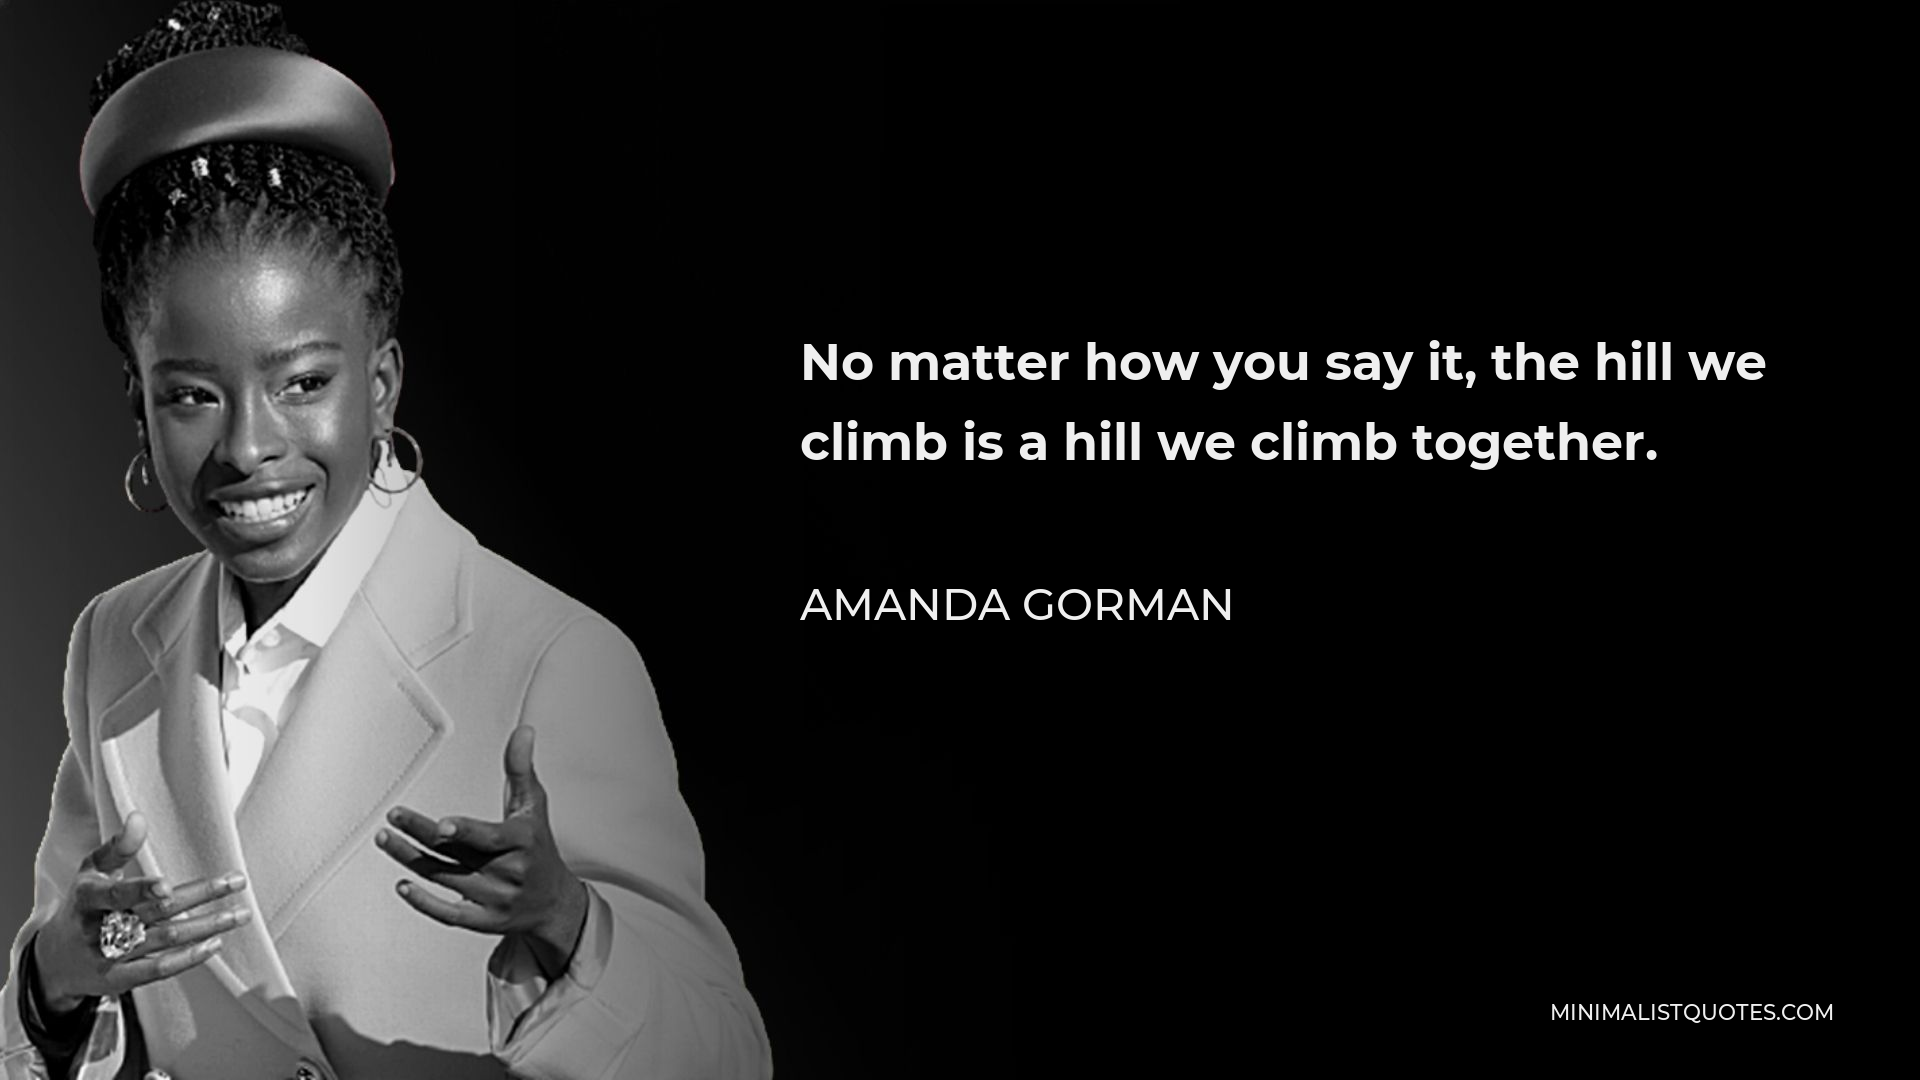 Amanda Gorman Quote - No matter how you say it, the hill we climb is a hill we climb together.